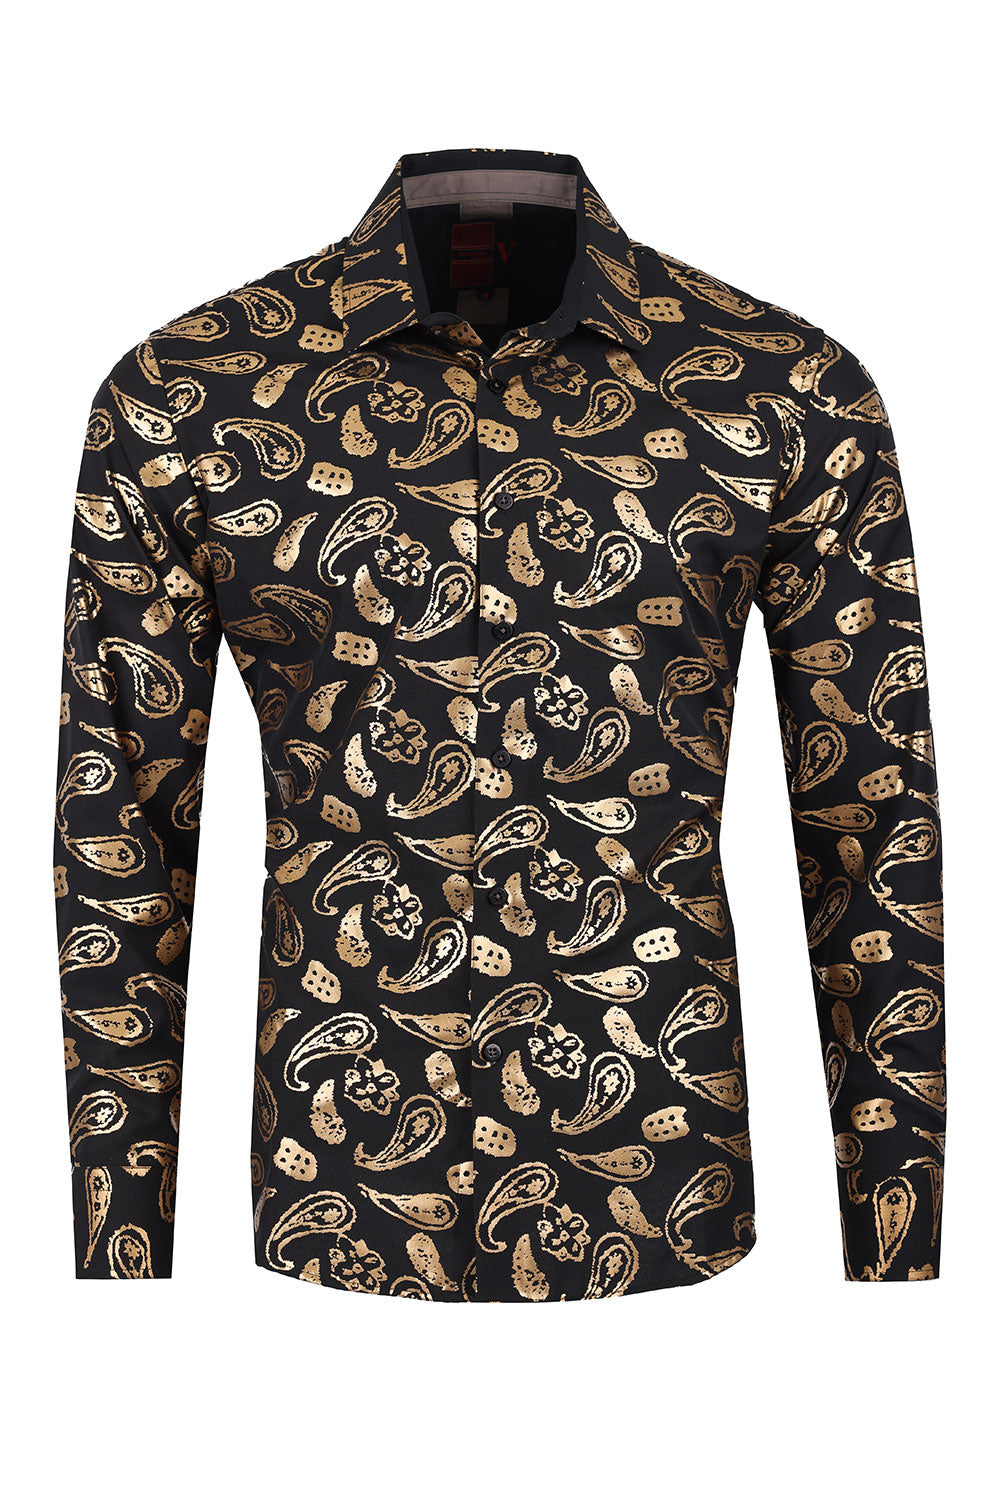 Vassari Mens Paisley Print Design Button Down Luxury Shirt  2VS148 Black and Gold